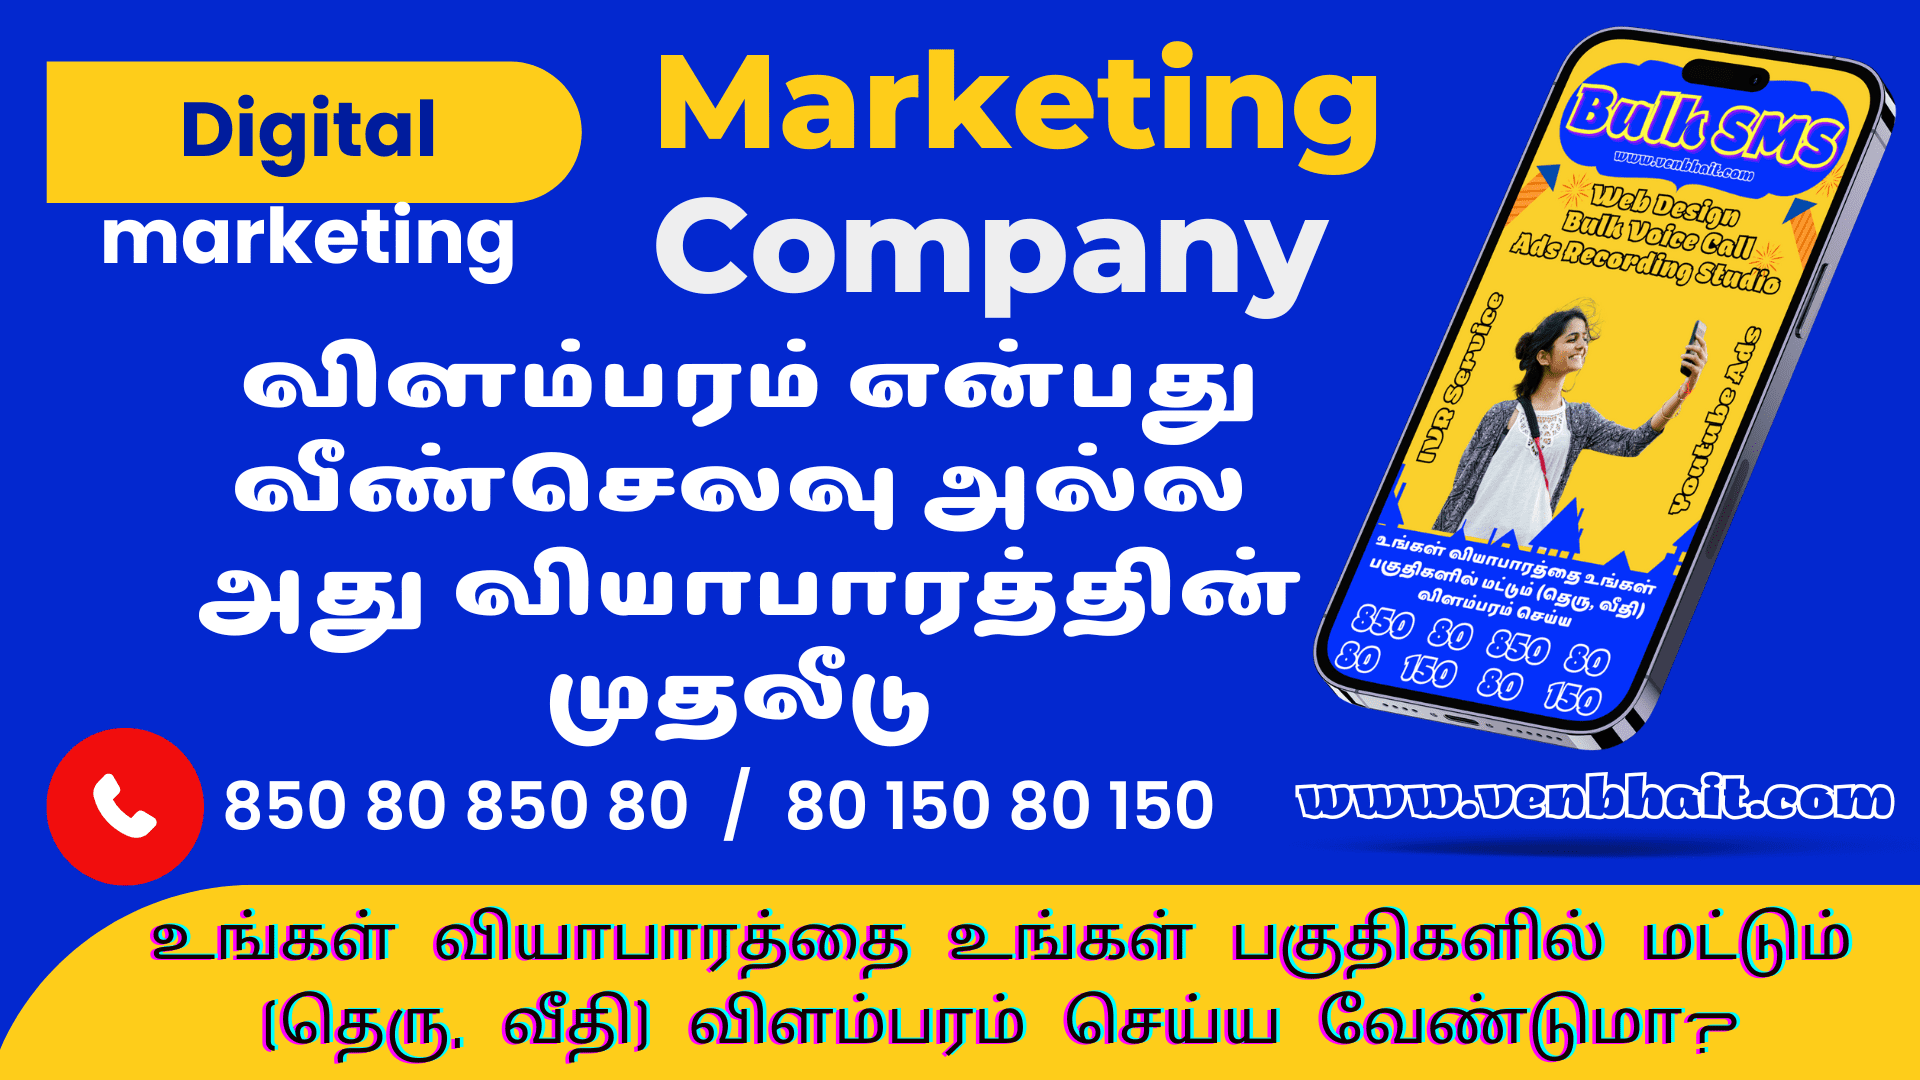 Local Ads Veppanapalli Election Advertising Bulk SMS Bulk Voice Call  